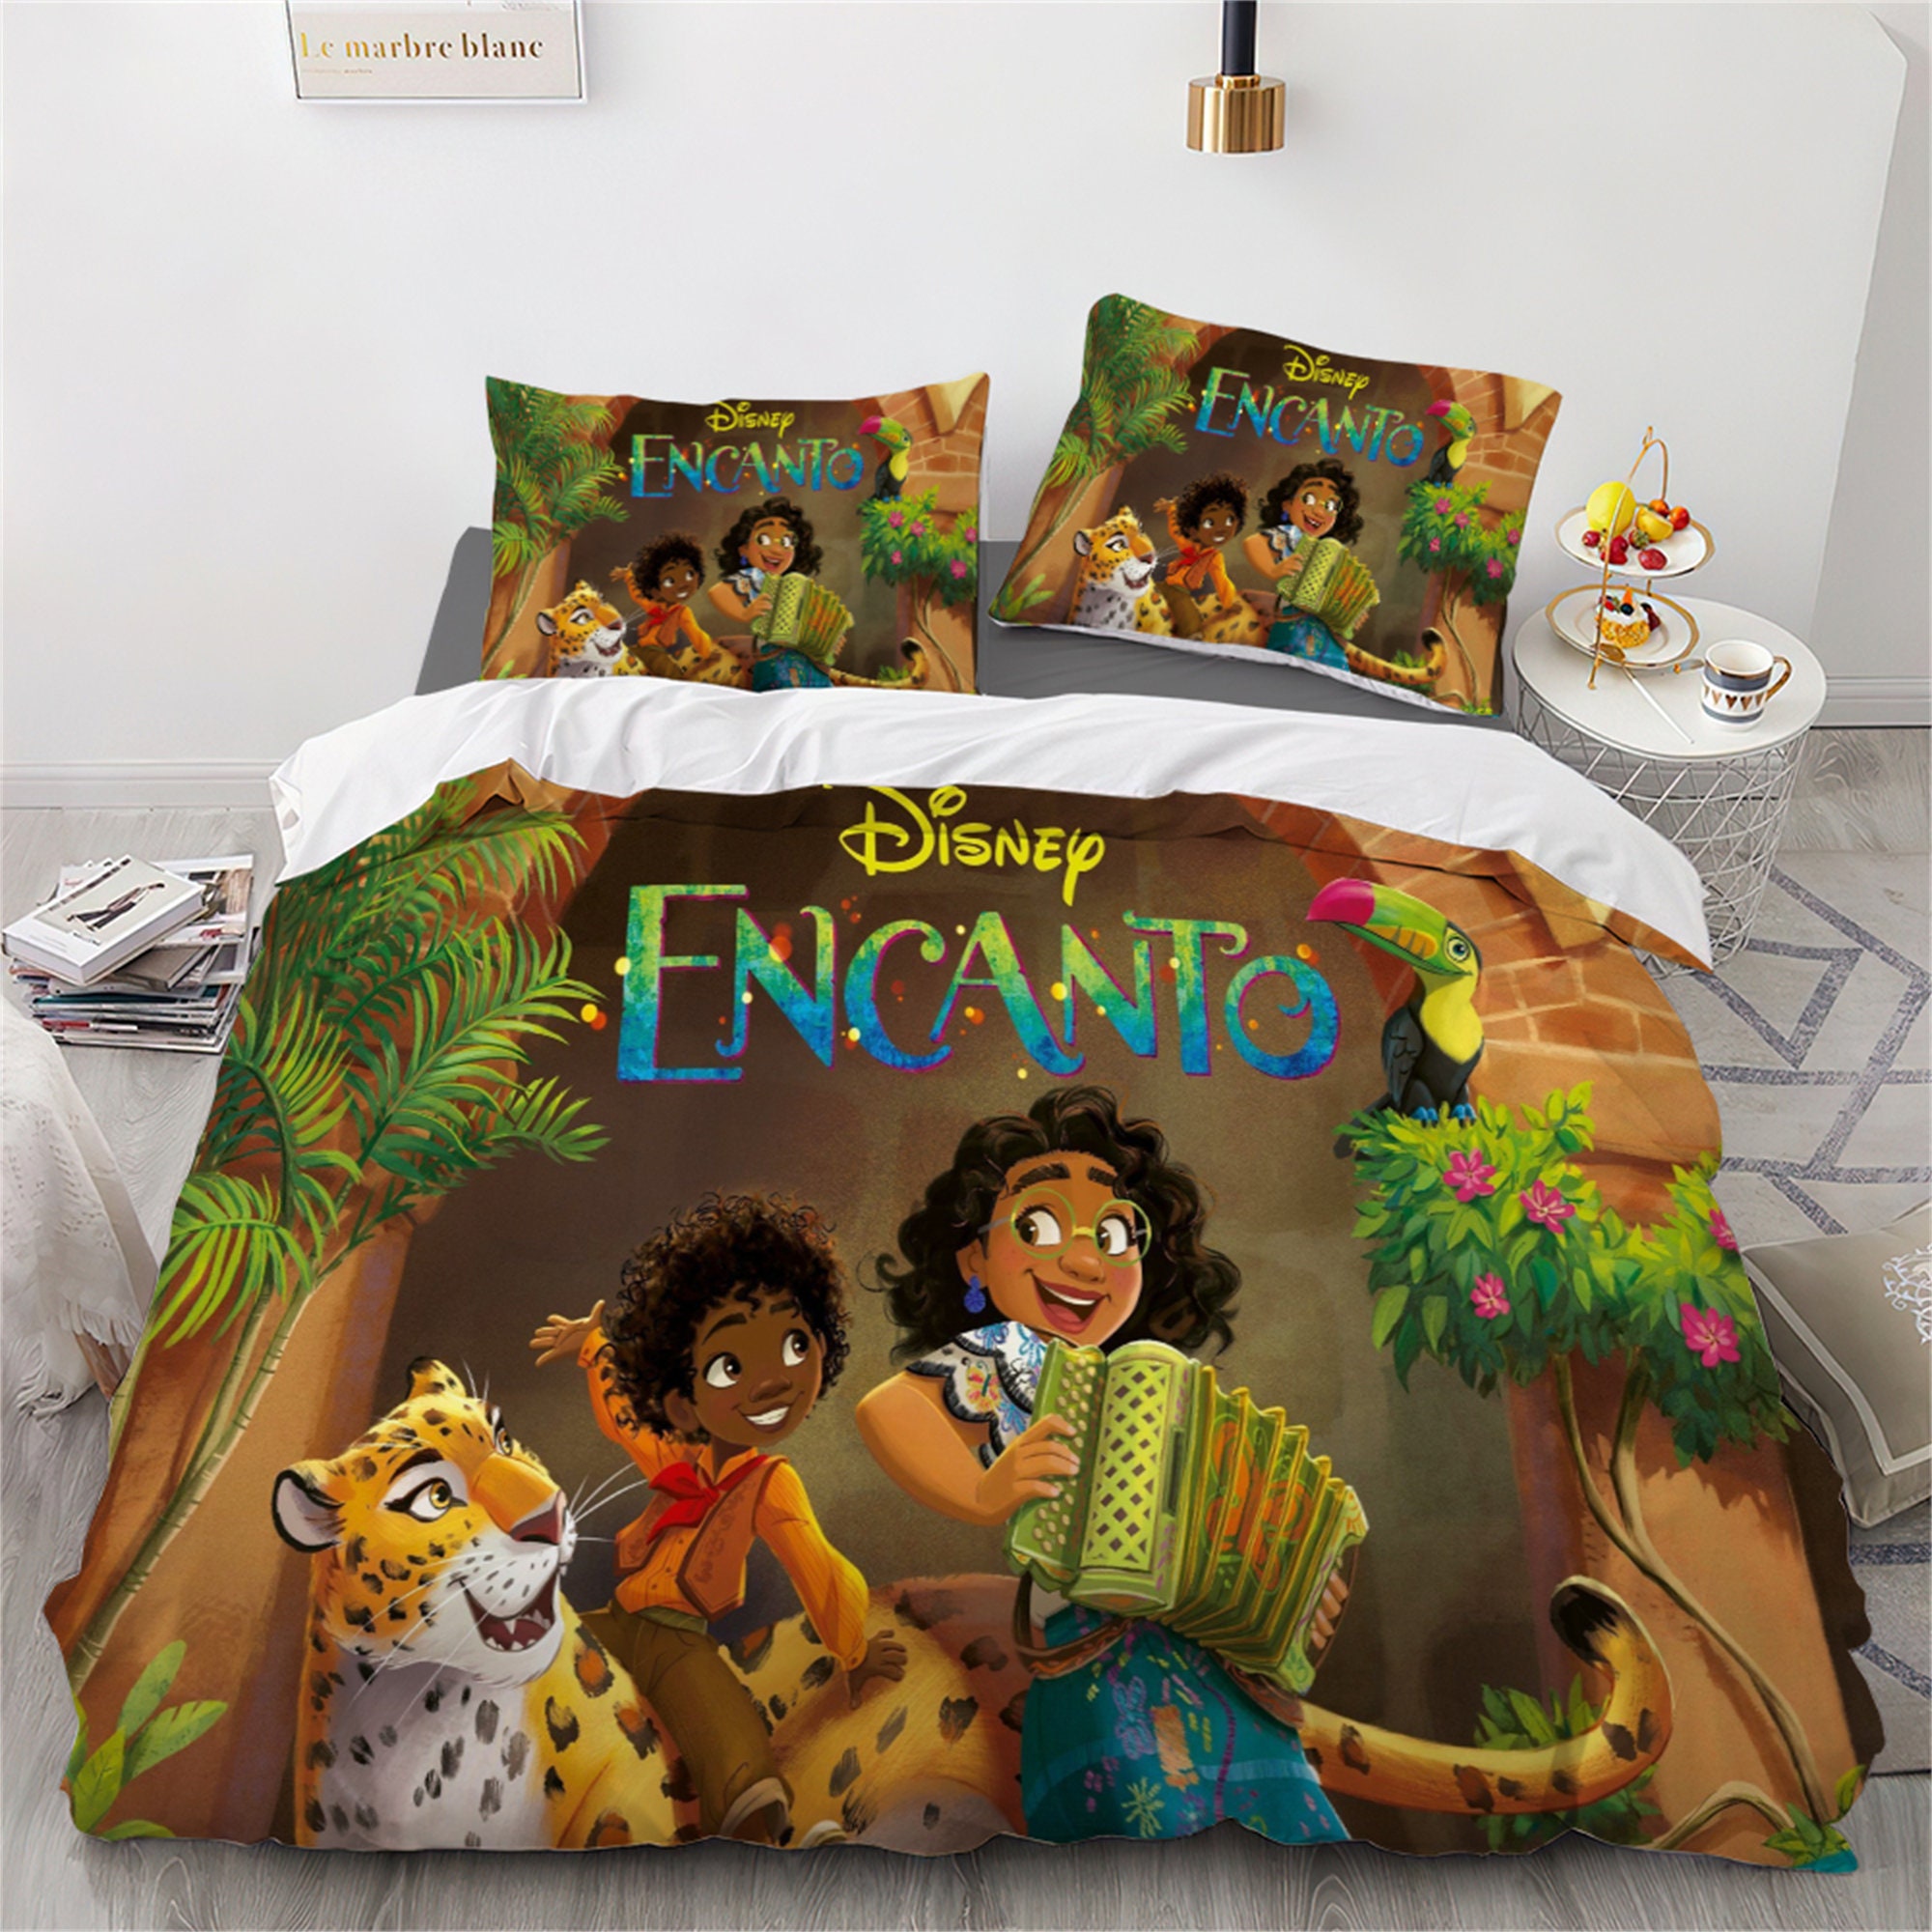 Northwest Disney's Encanto Pillow, 18 x 18, Perfect Isabella